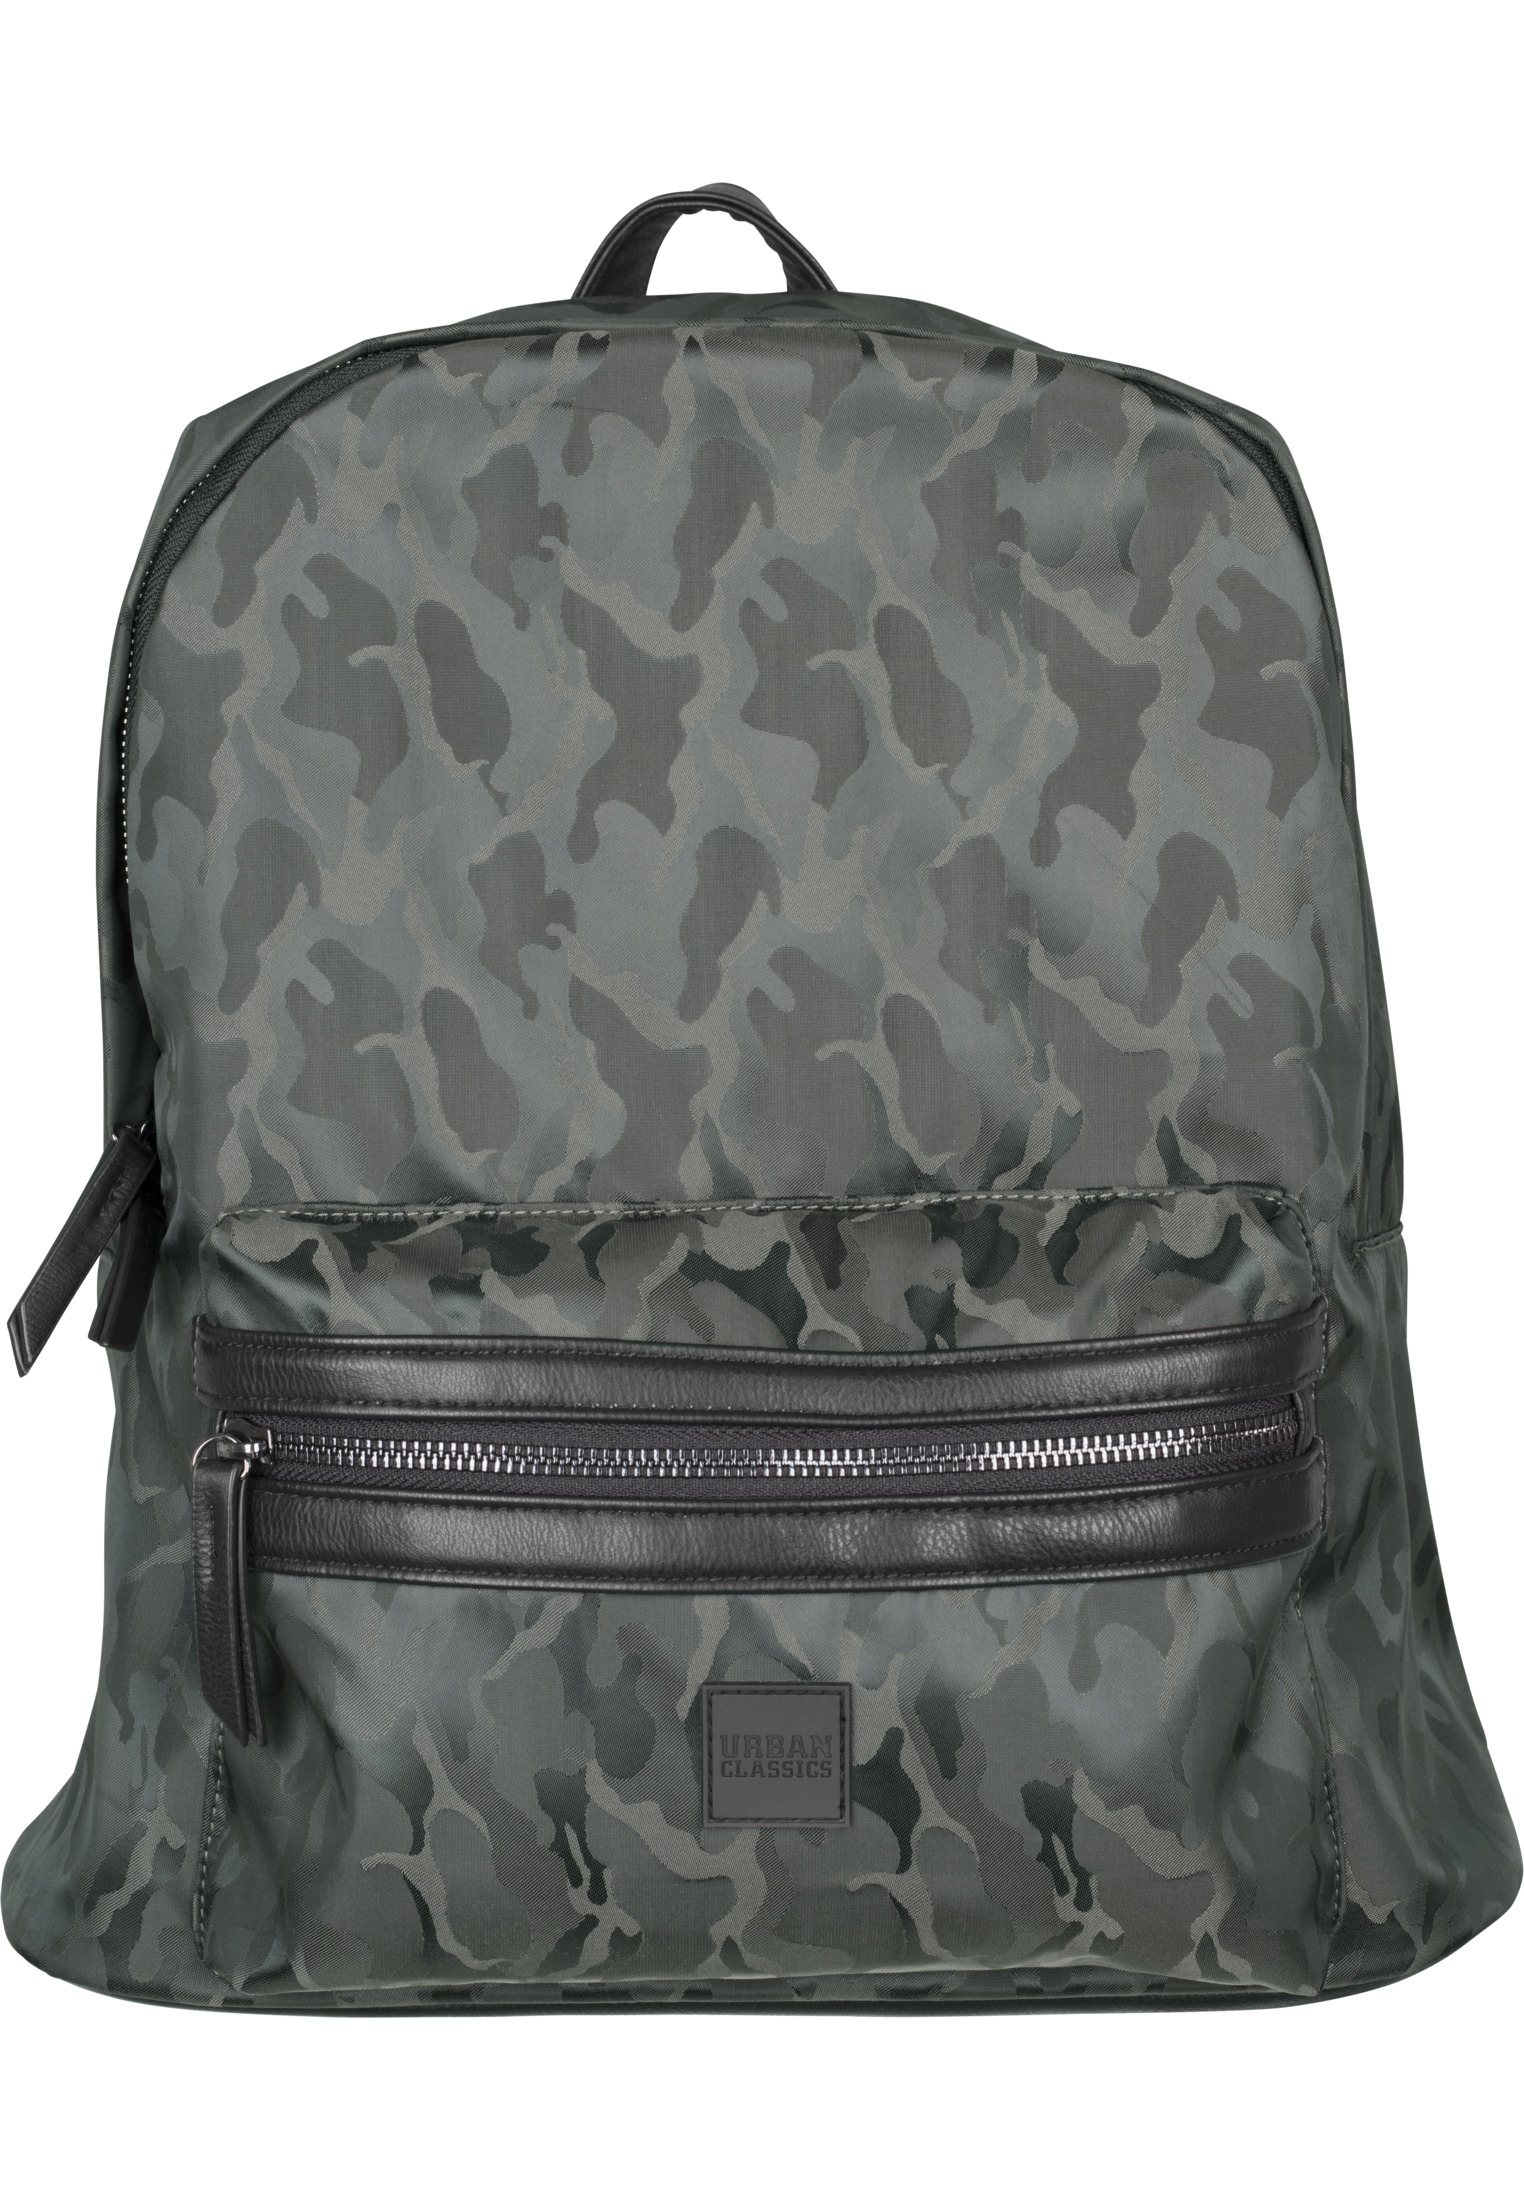 UrbanClassics Camo Jacquard Backpack